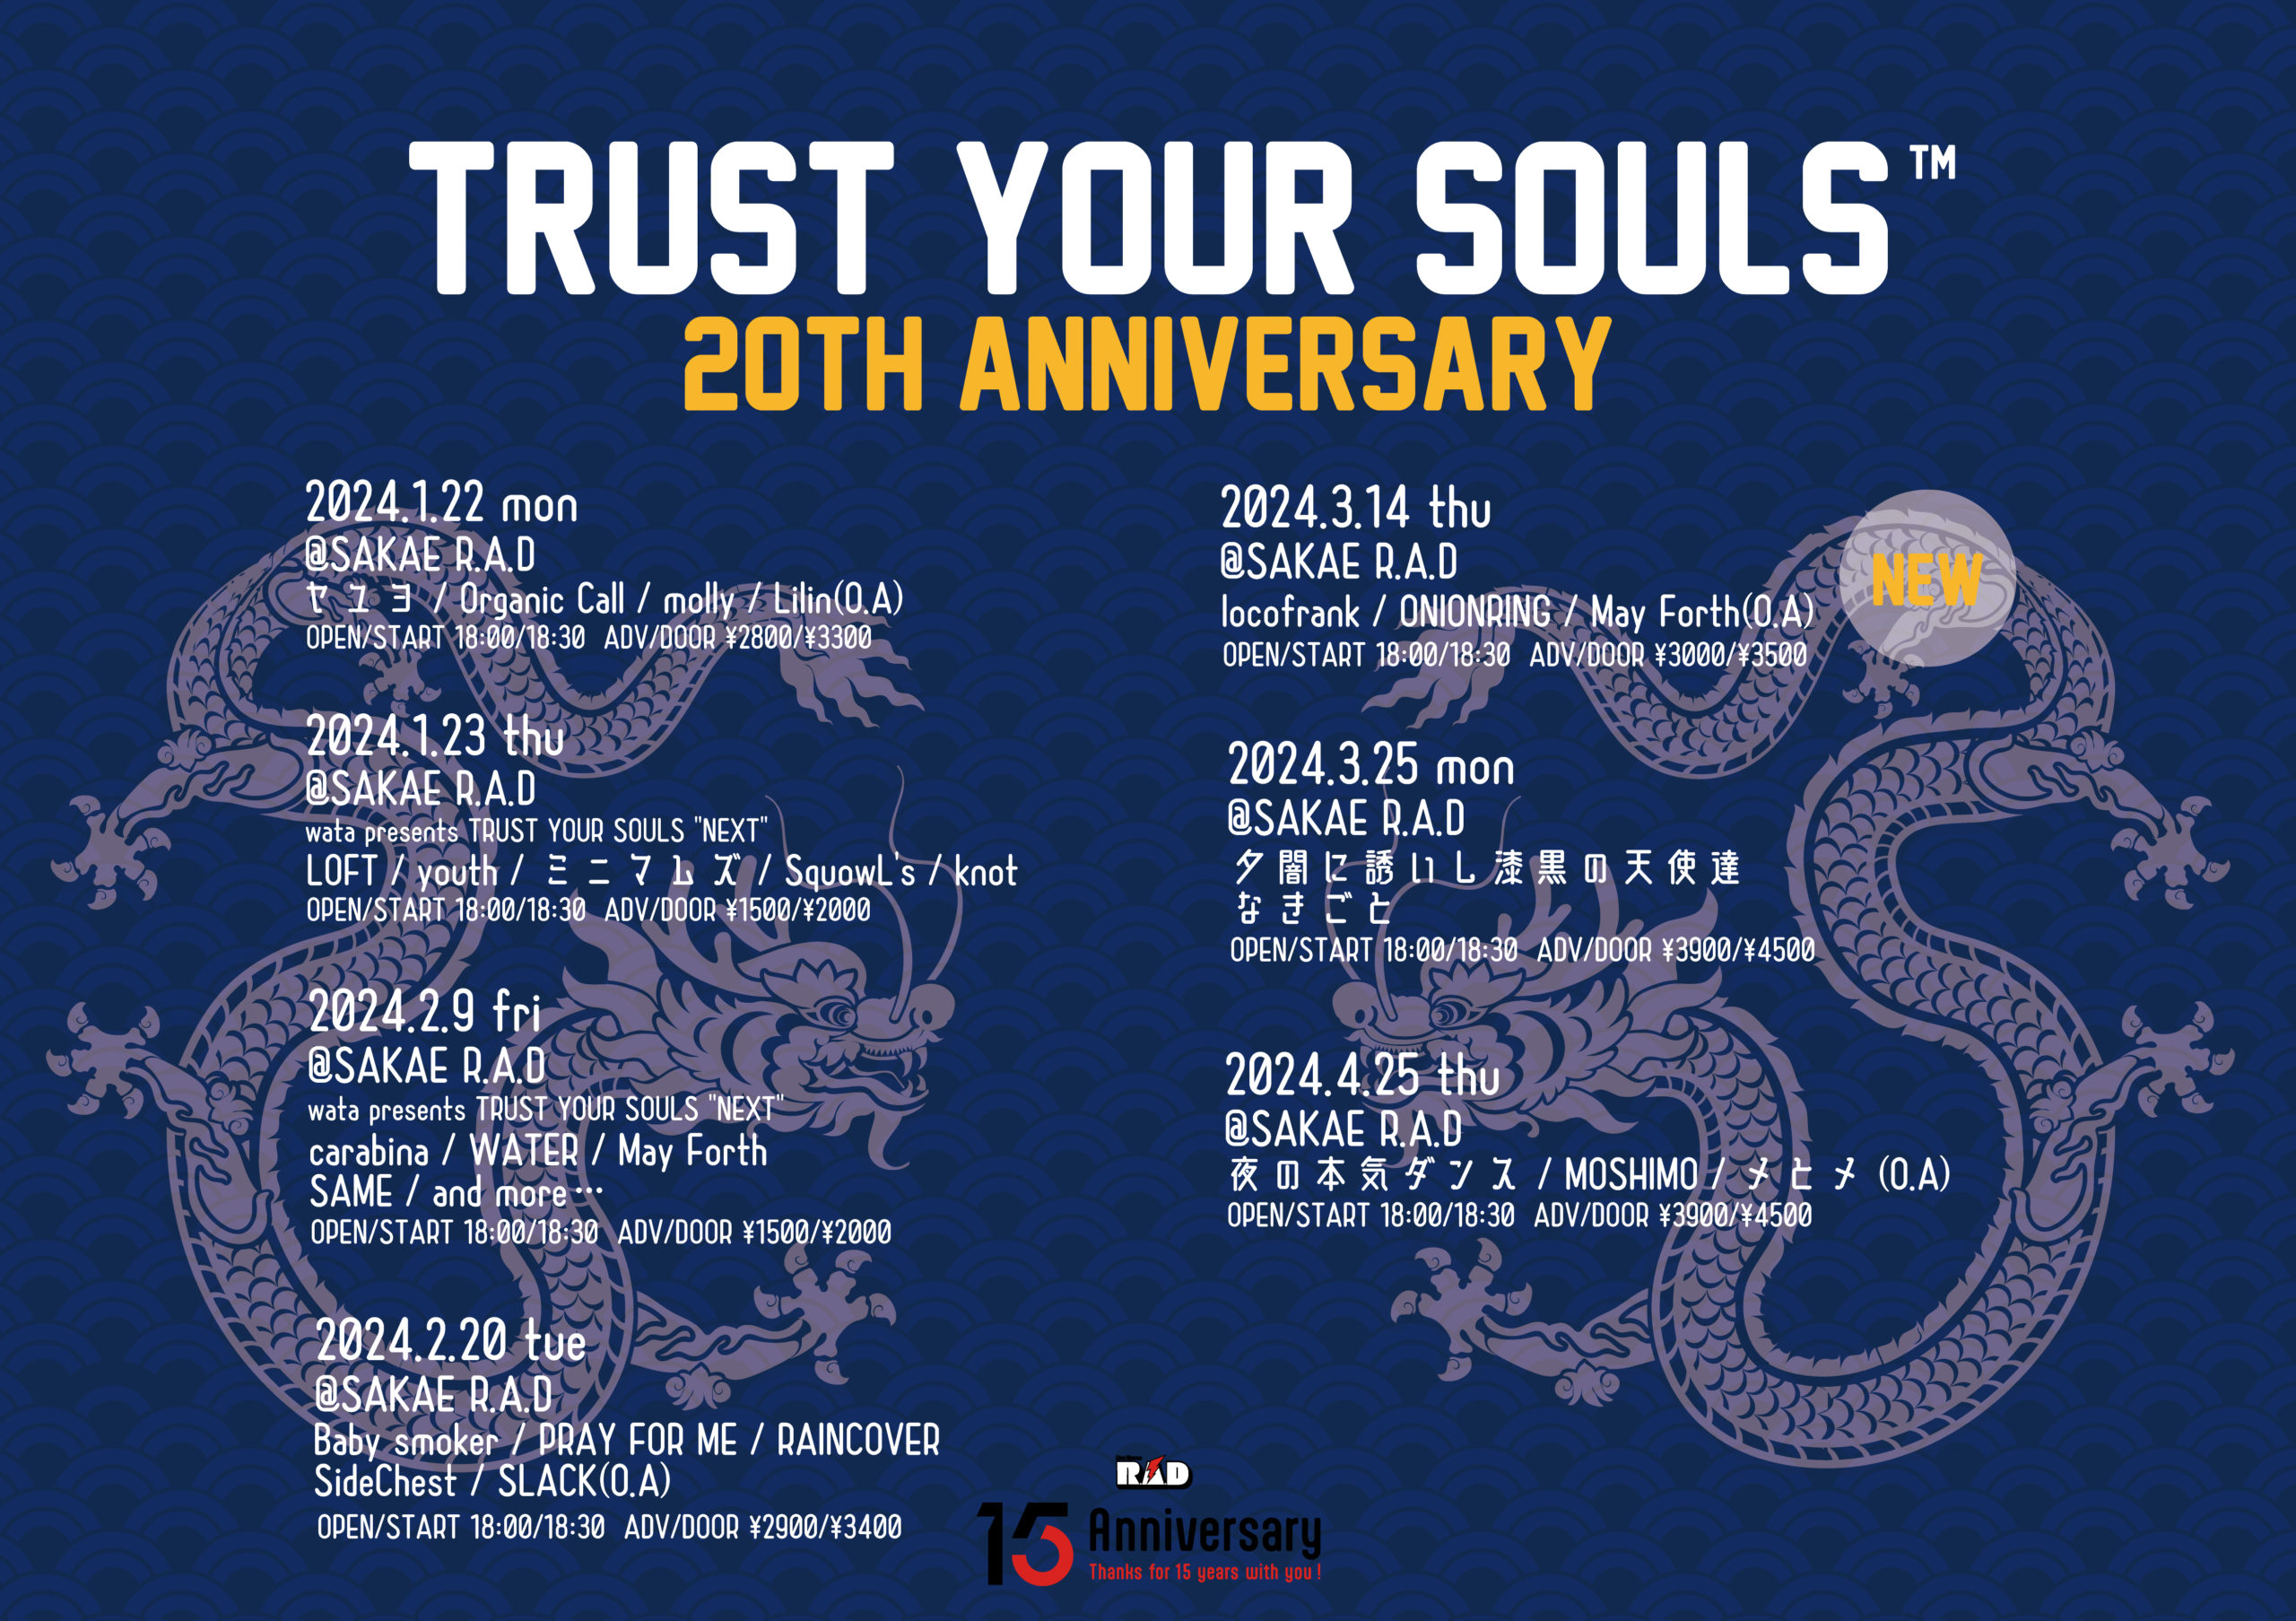 wata presents TRUST YOUR SOULS 20th Anniversary -R.A.D 15th Anniversary